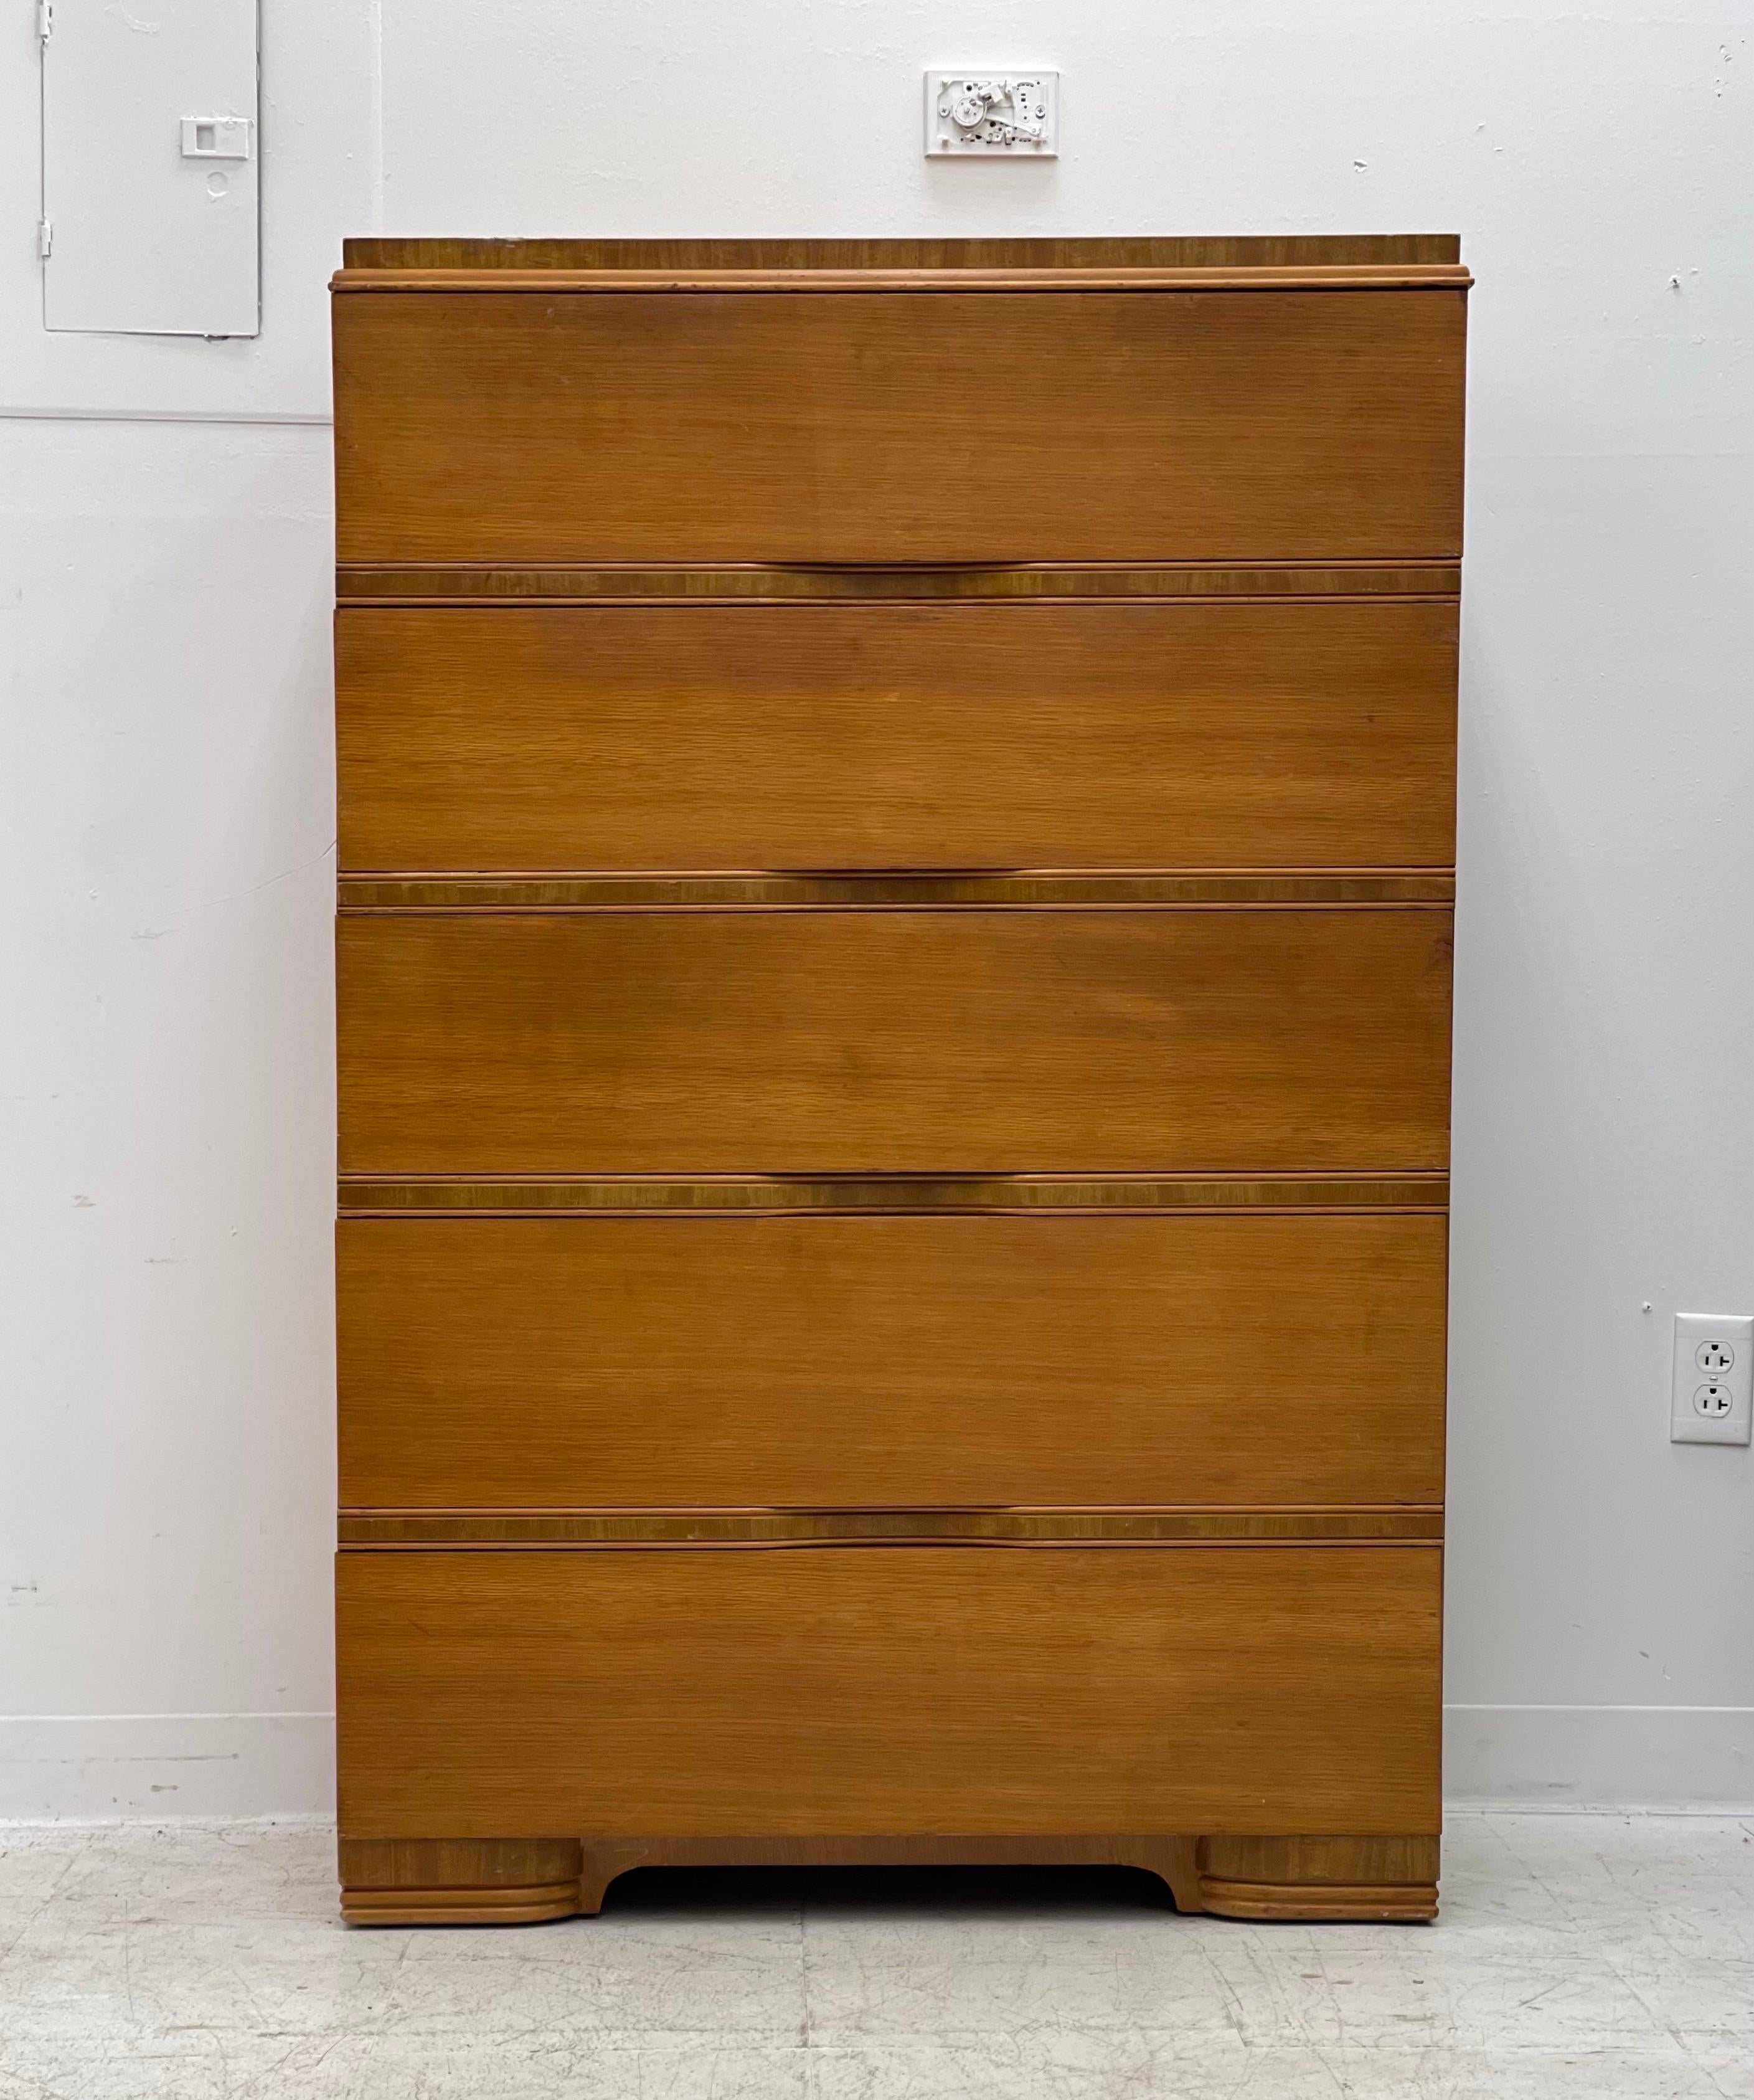 Vintage retro dresser cabinet storage drawers

Dimensions. 34 W ; 52 H ; 18 1/2 D.